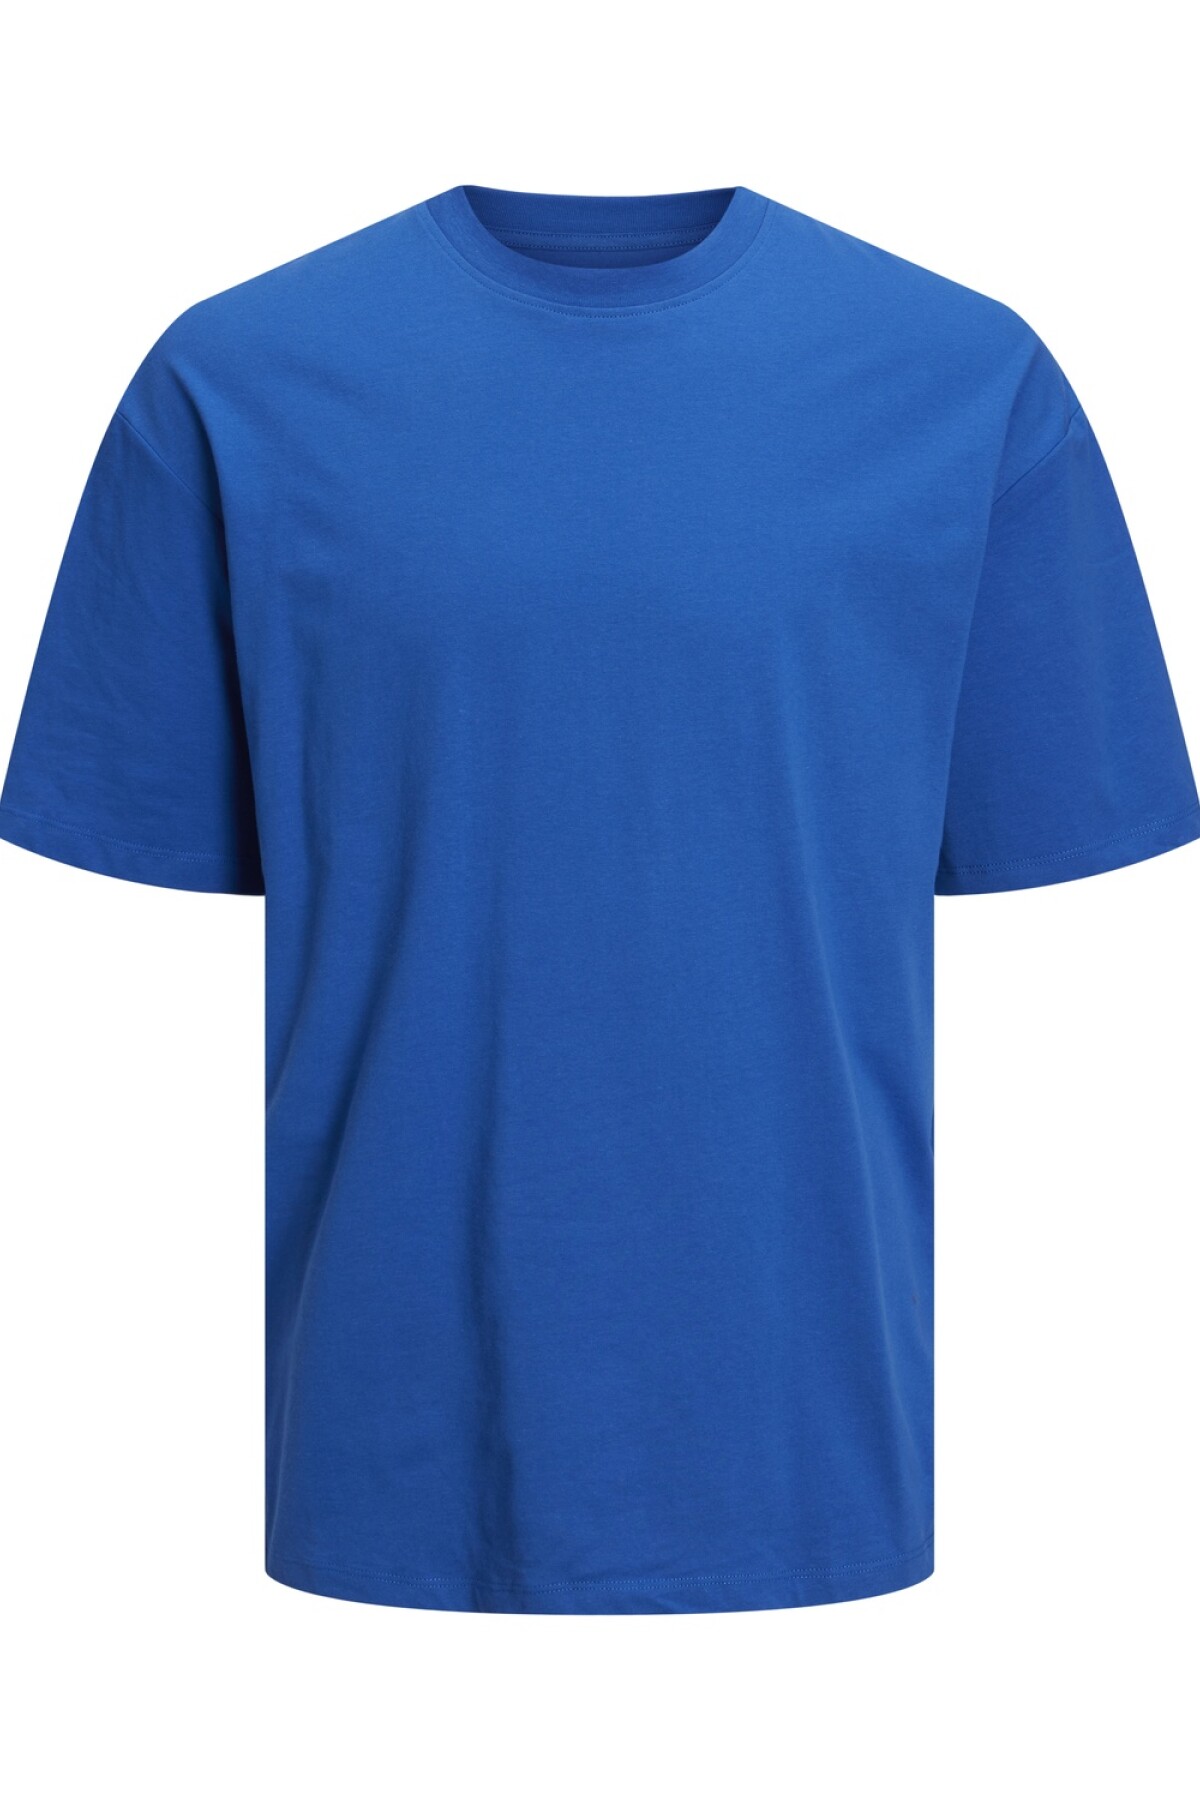 Camiseta Brink Básica Nautical Blue